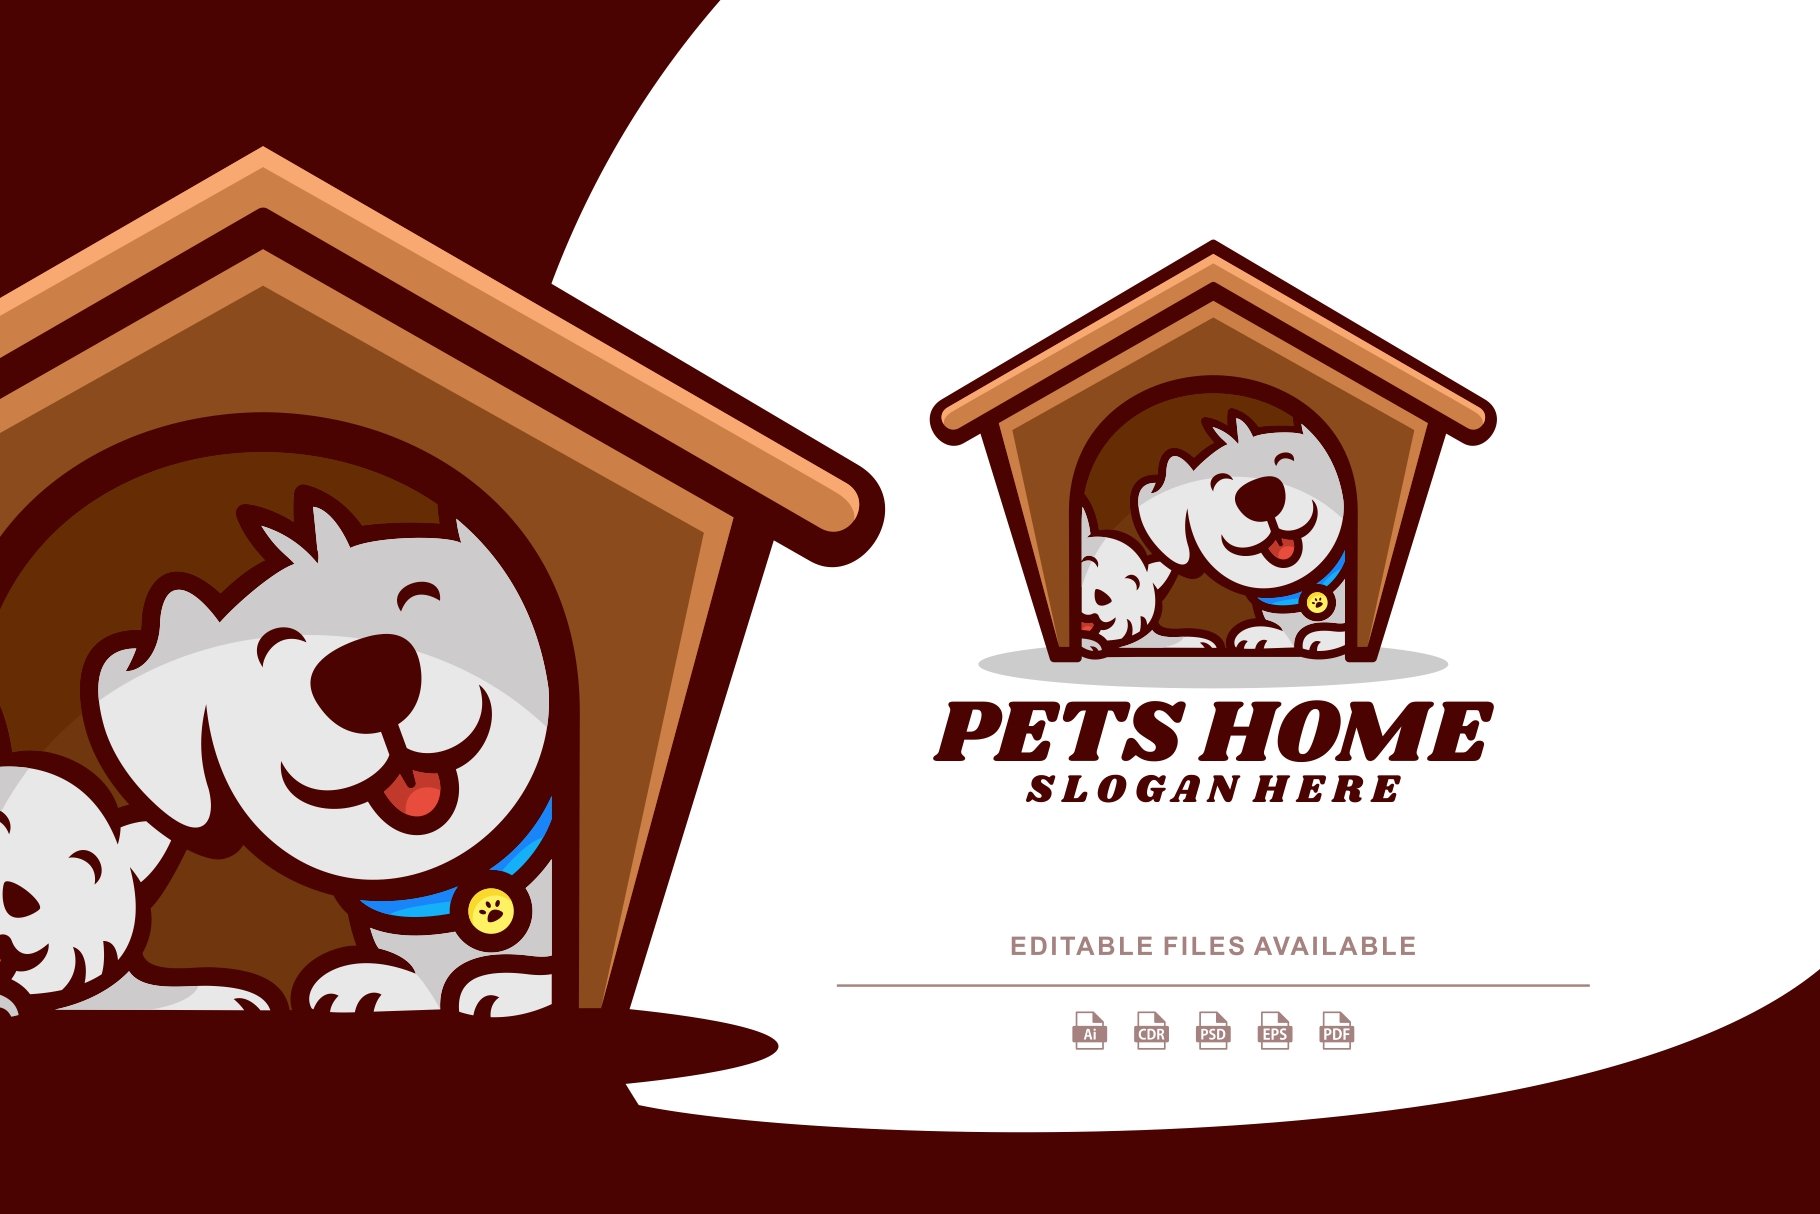 Pets Home Mascot Cartoon Logo cover image.